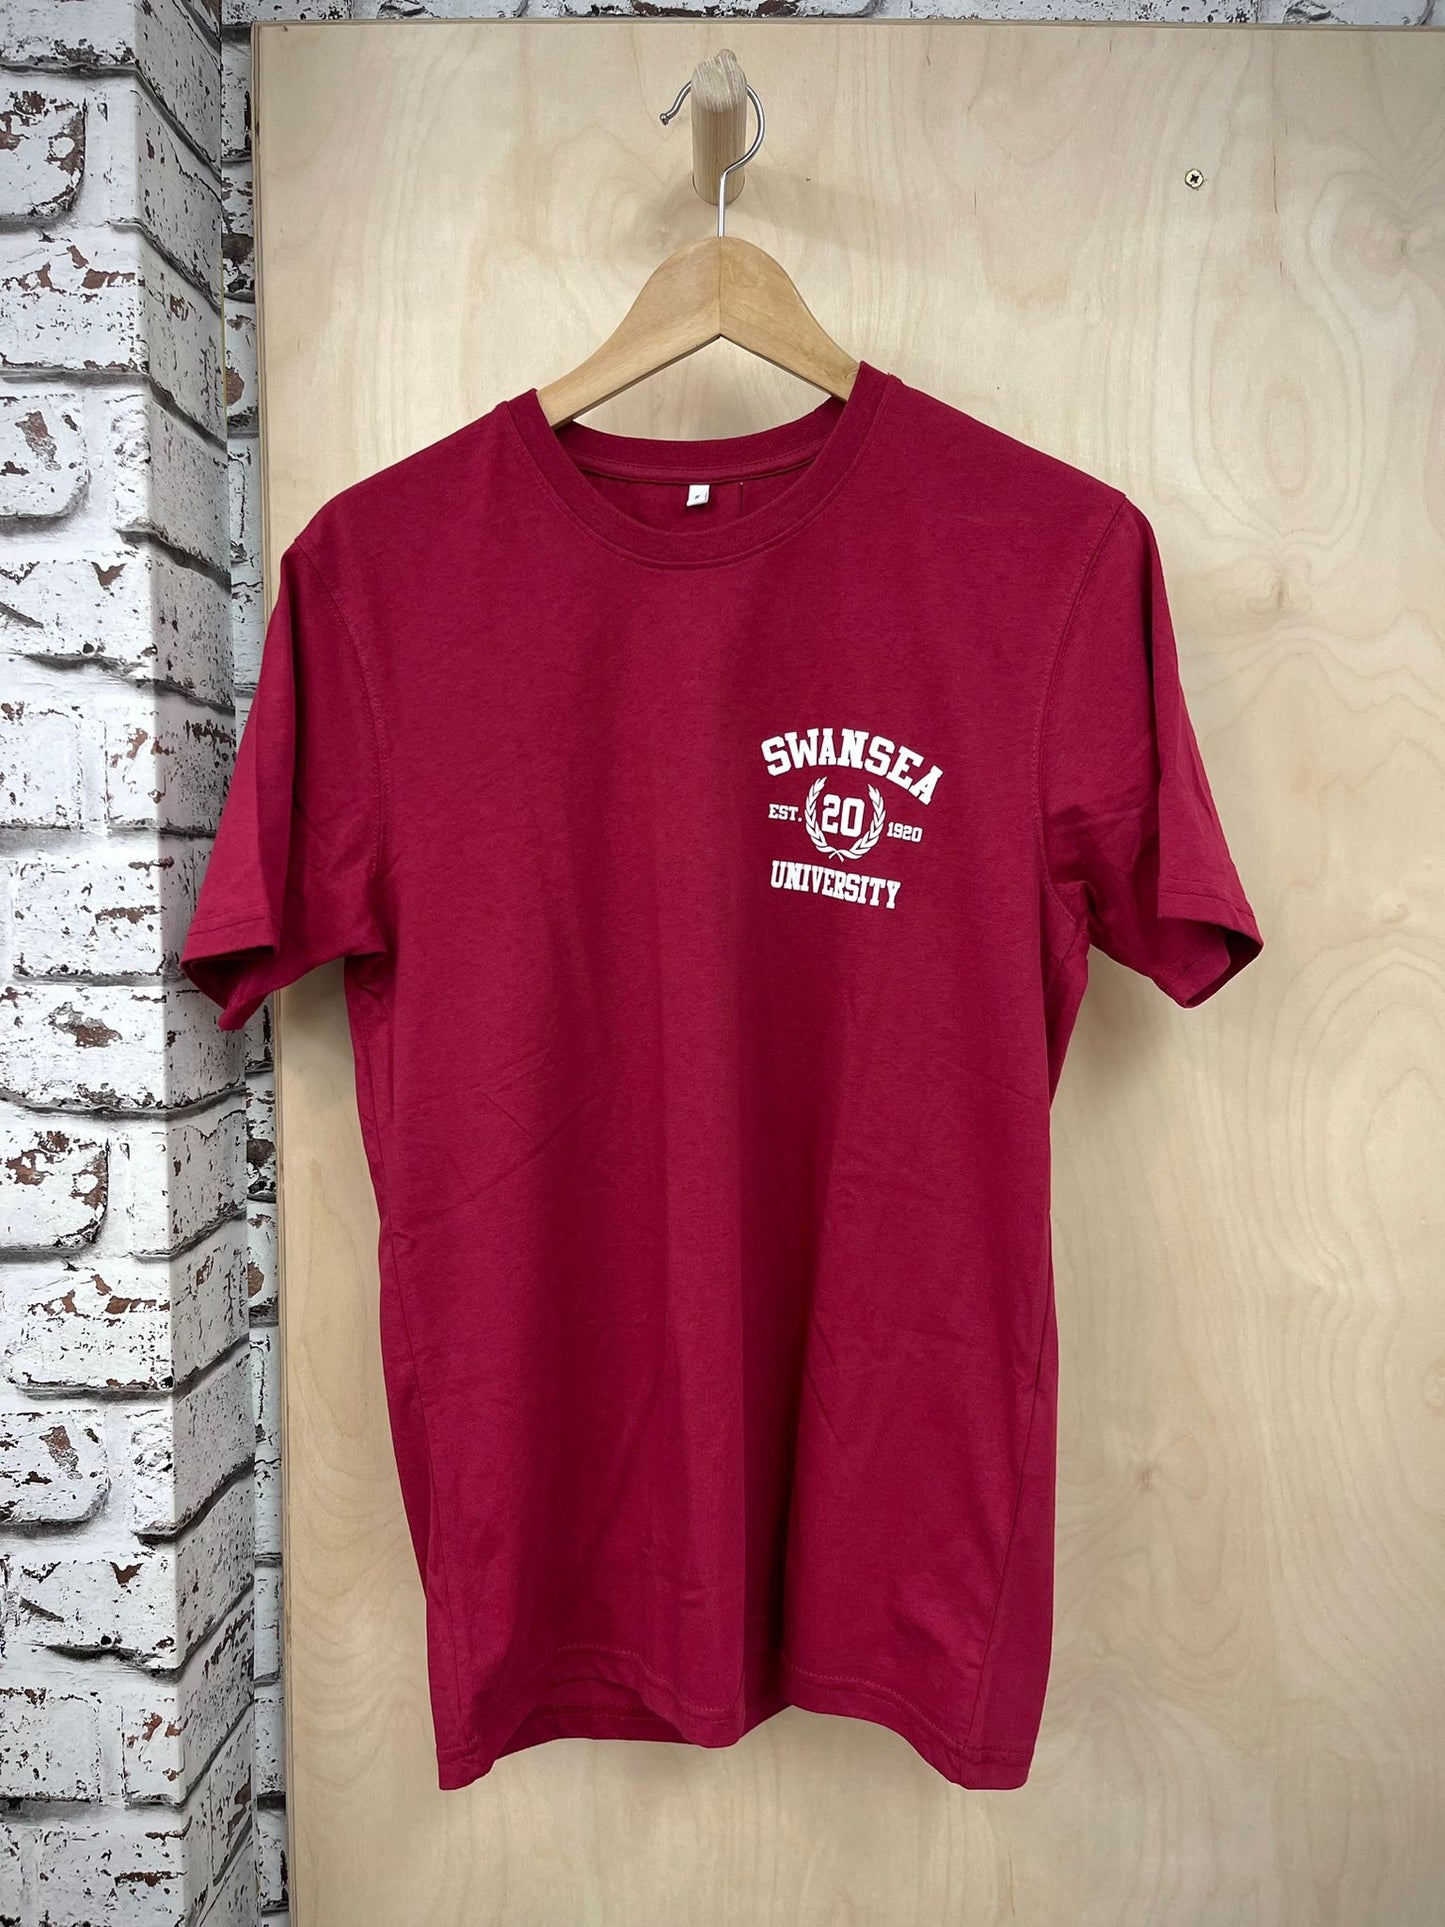 SALE - Swansea University T-Shirt - 1920 Small Laurel